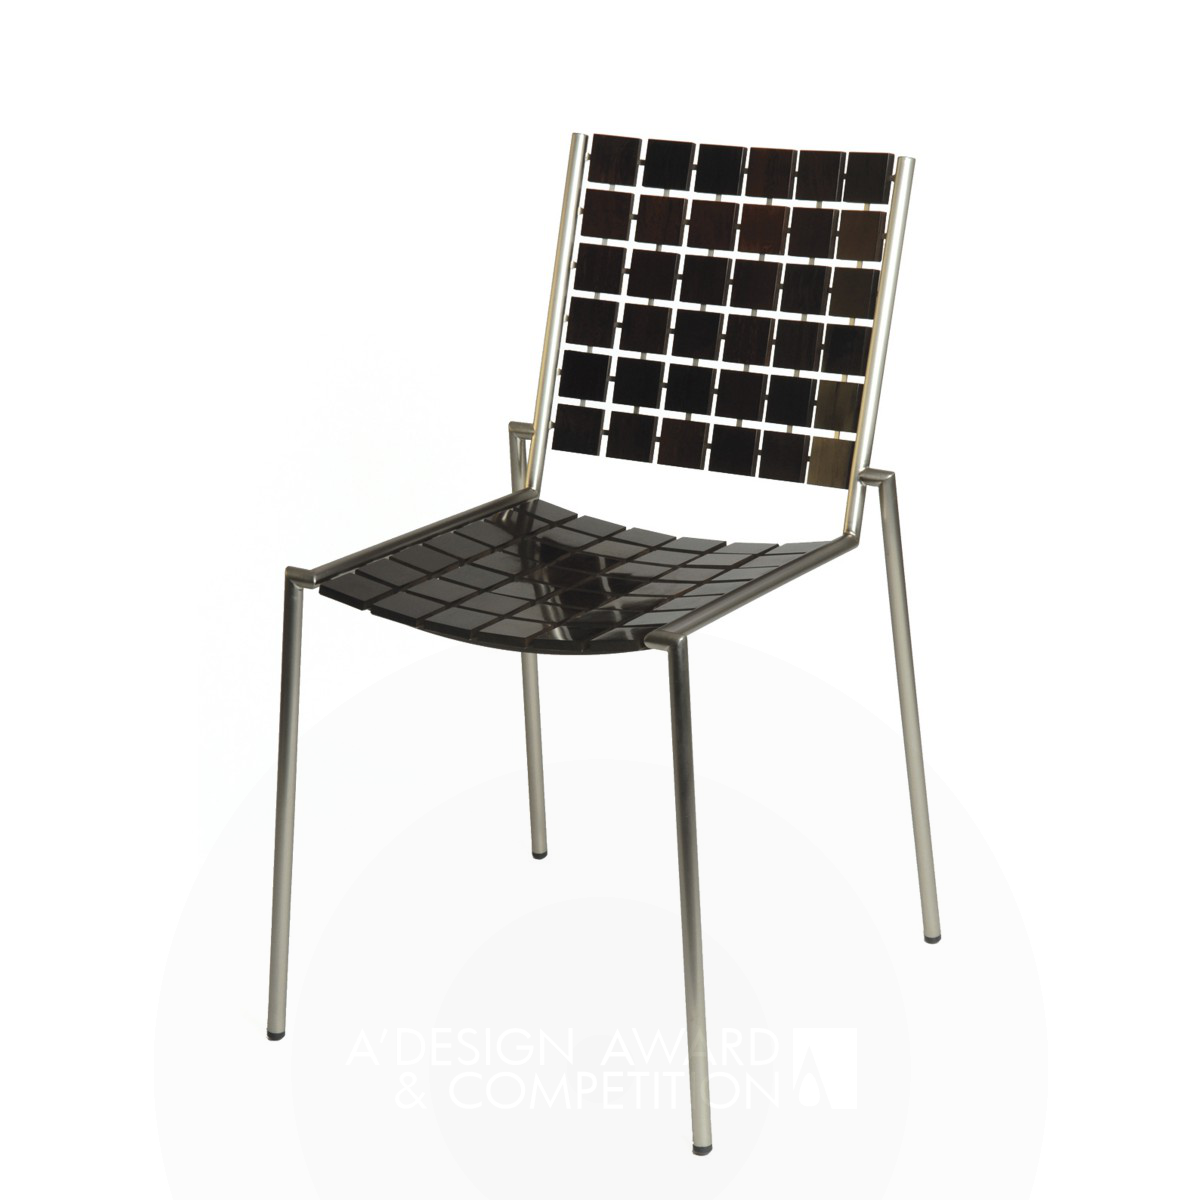 5x5 Chair by Barbara Princic